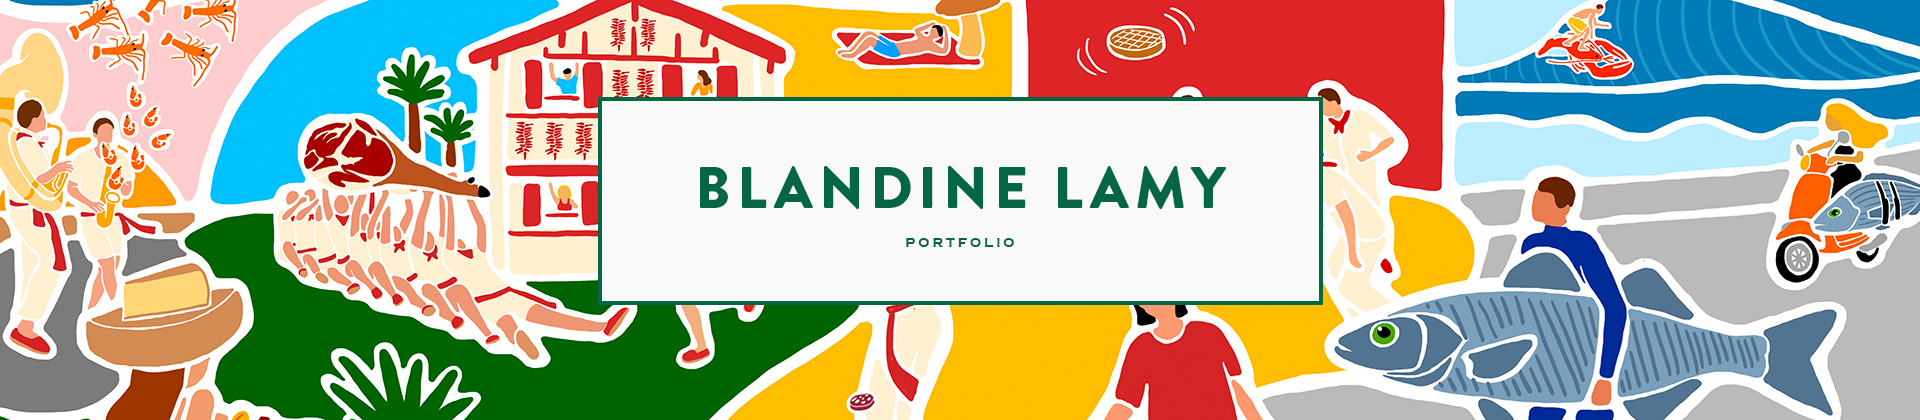 Blandine Lamy